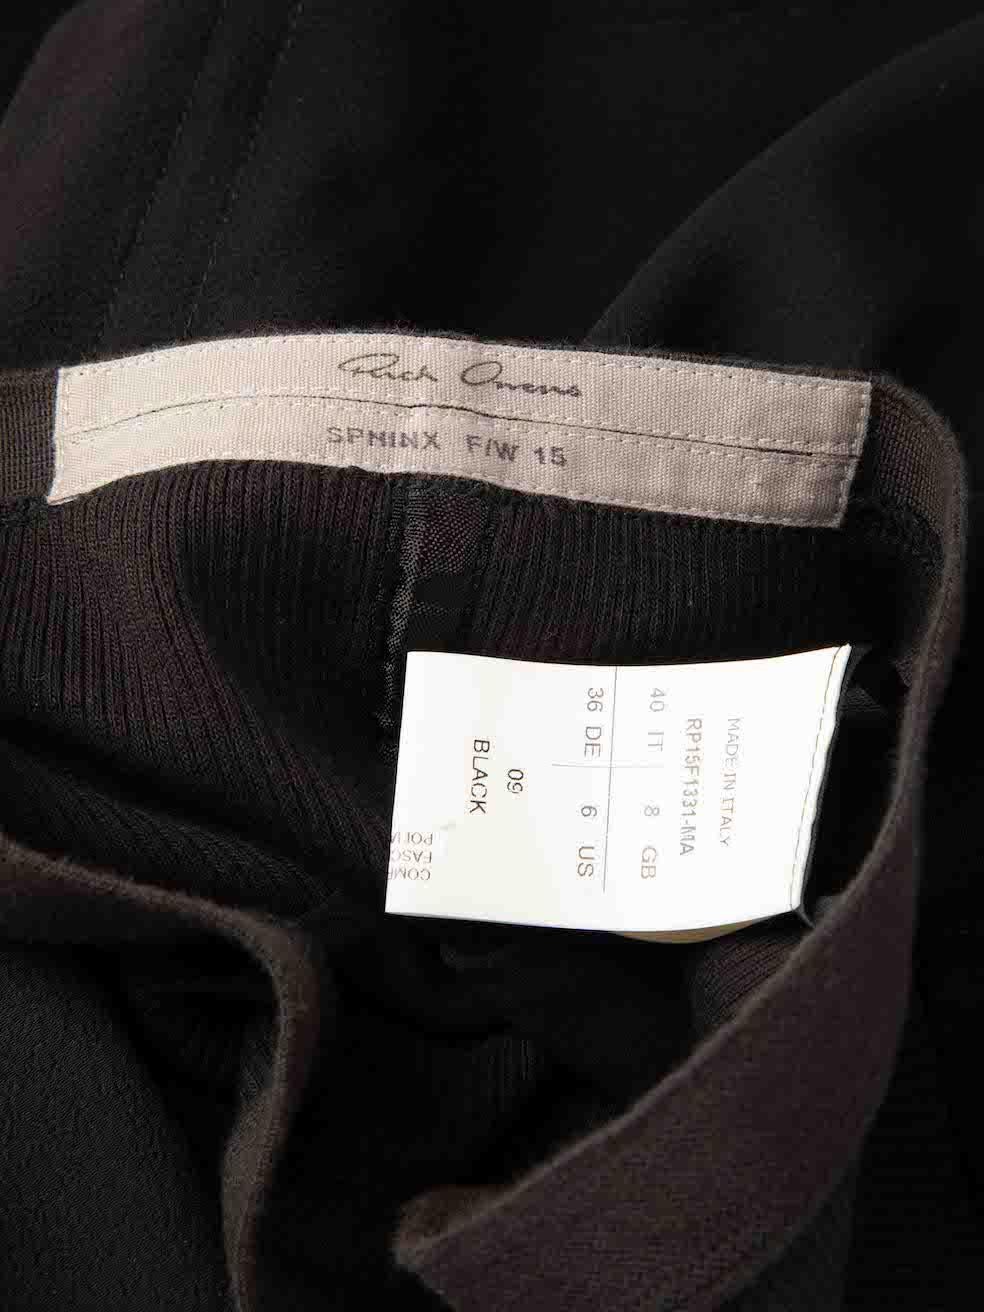 Rick Owens AW 15 Black Asymmetric Drape Midi Skirt Size S For Sale 1